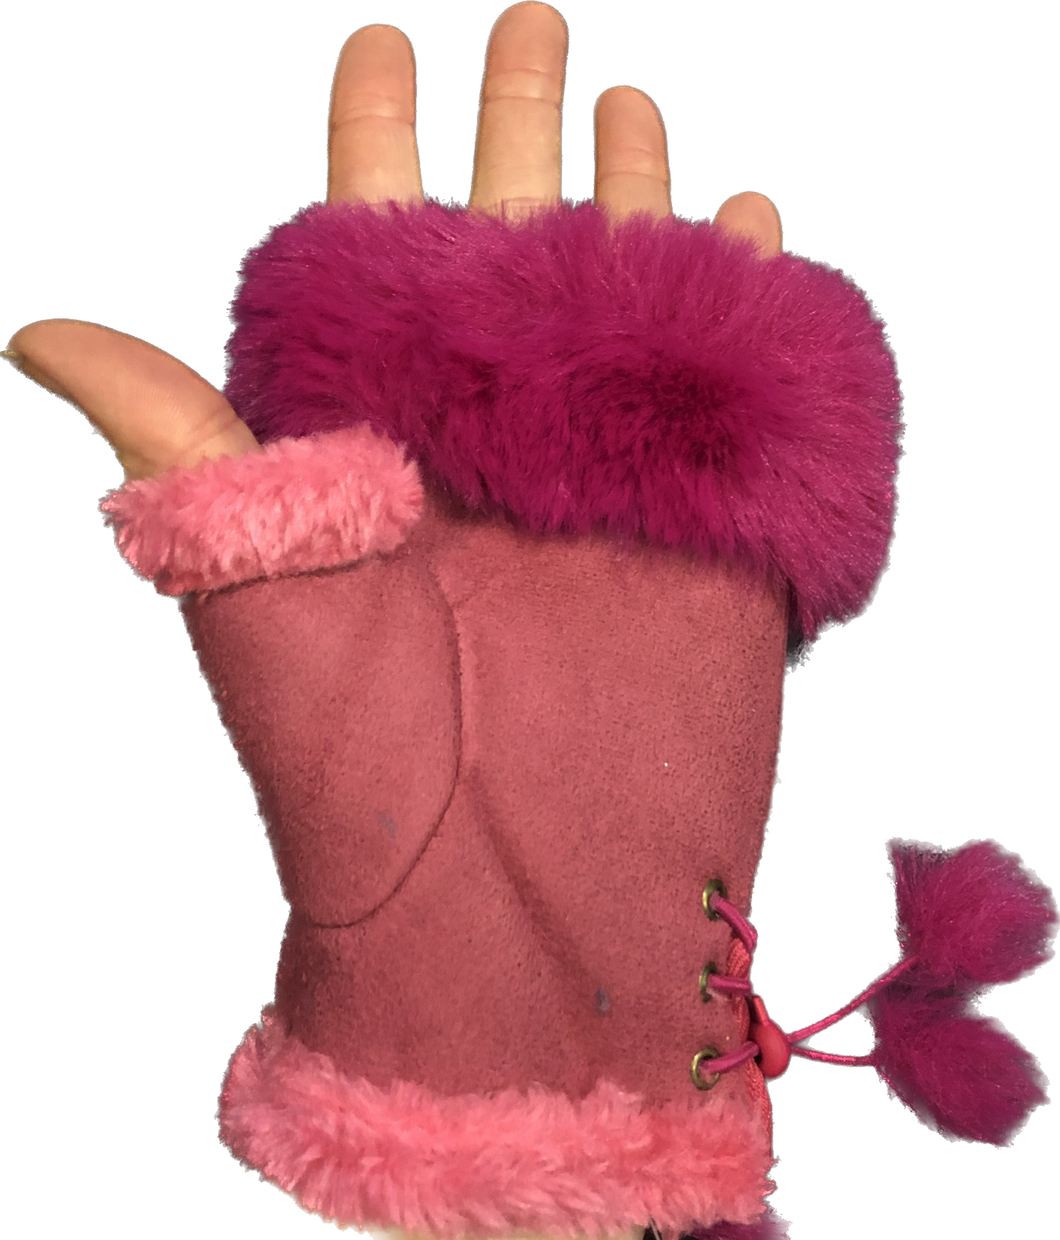 Fuchsia pink Faux Fur Trimmed Fingerless Gloves/mittens.